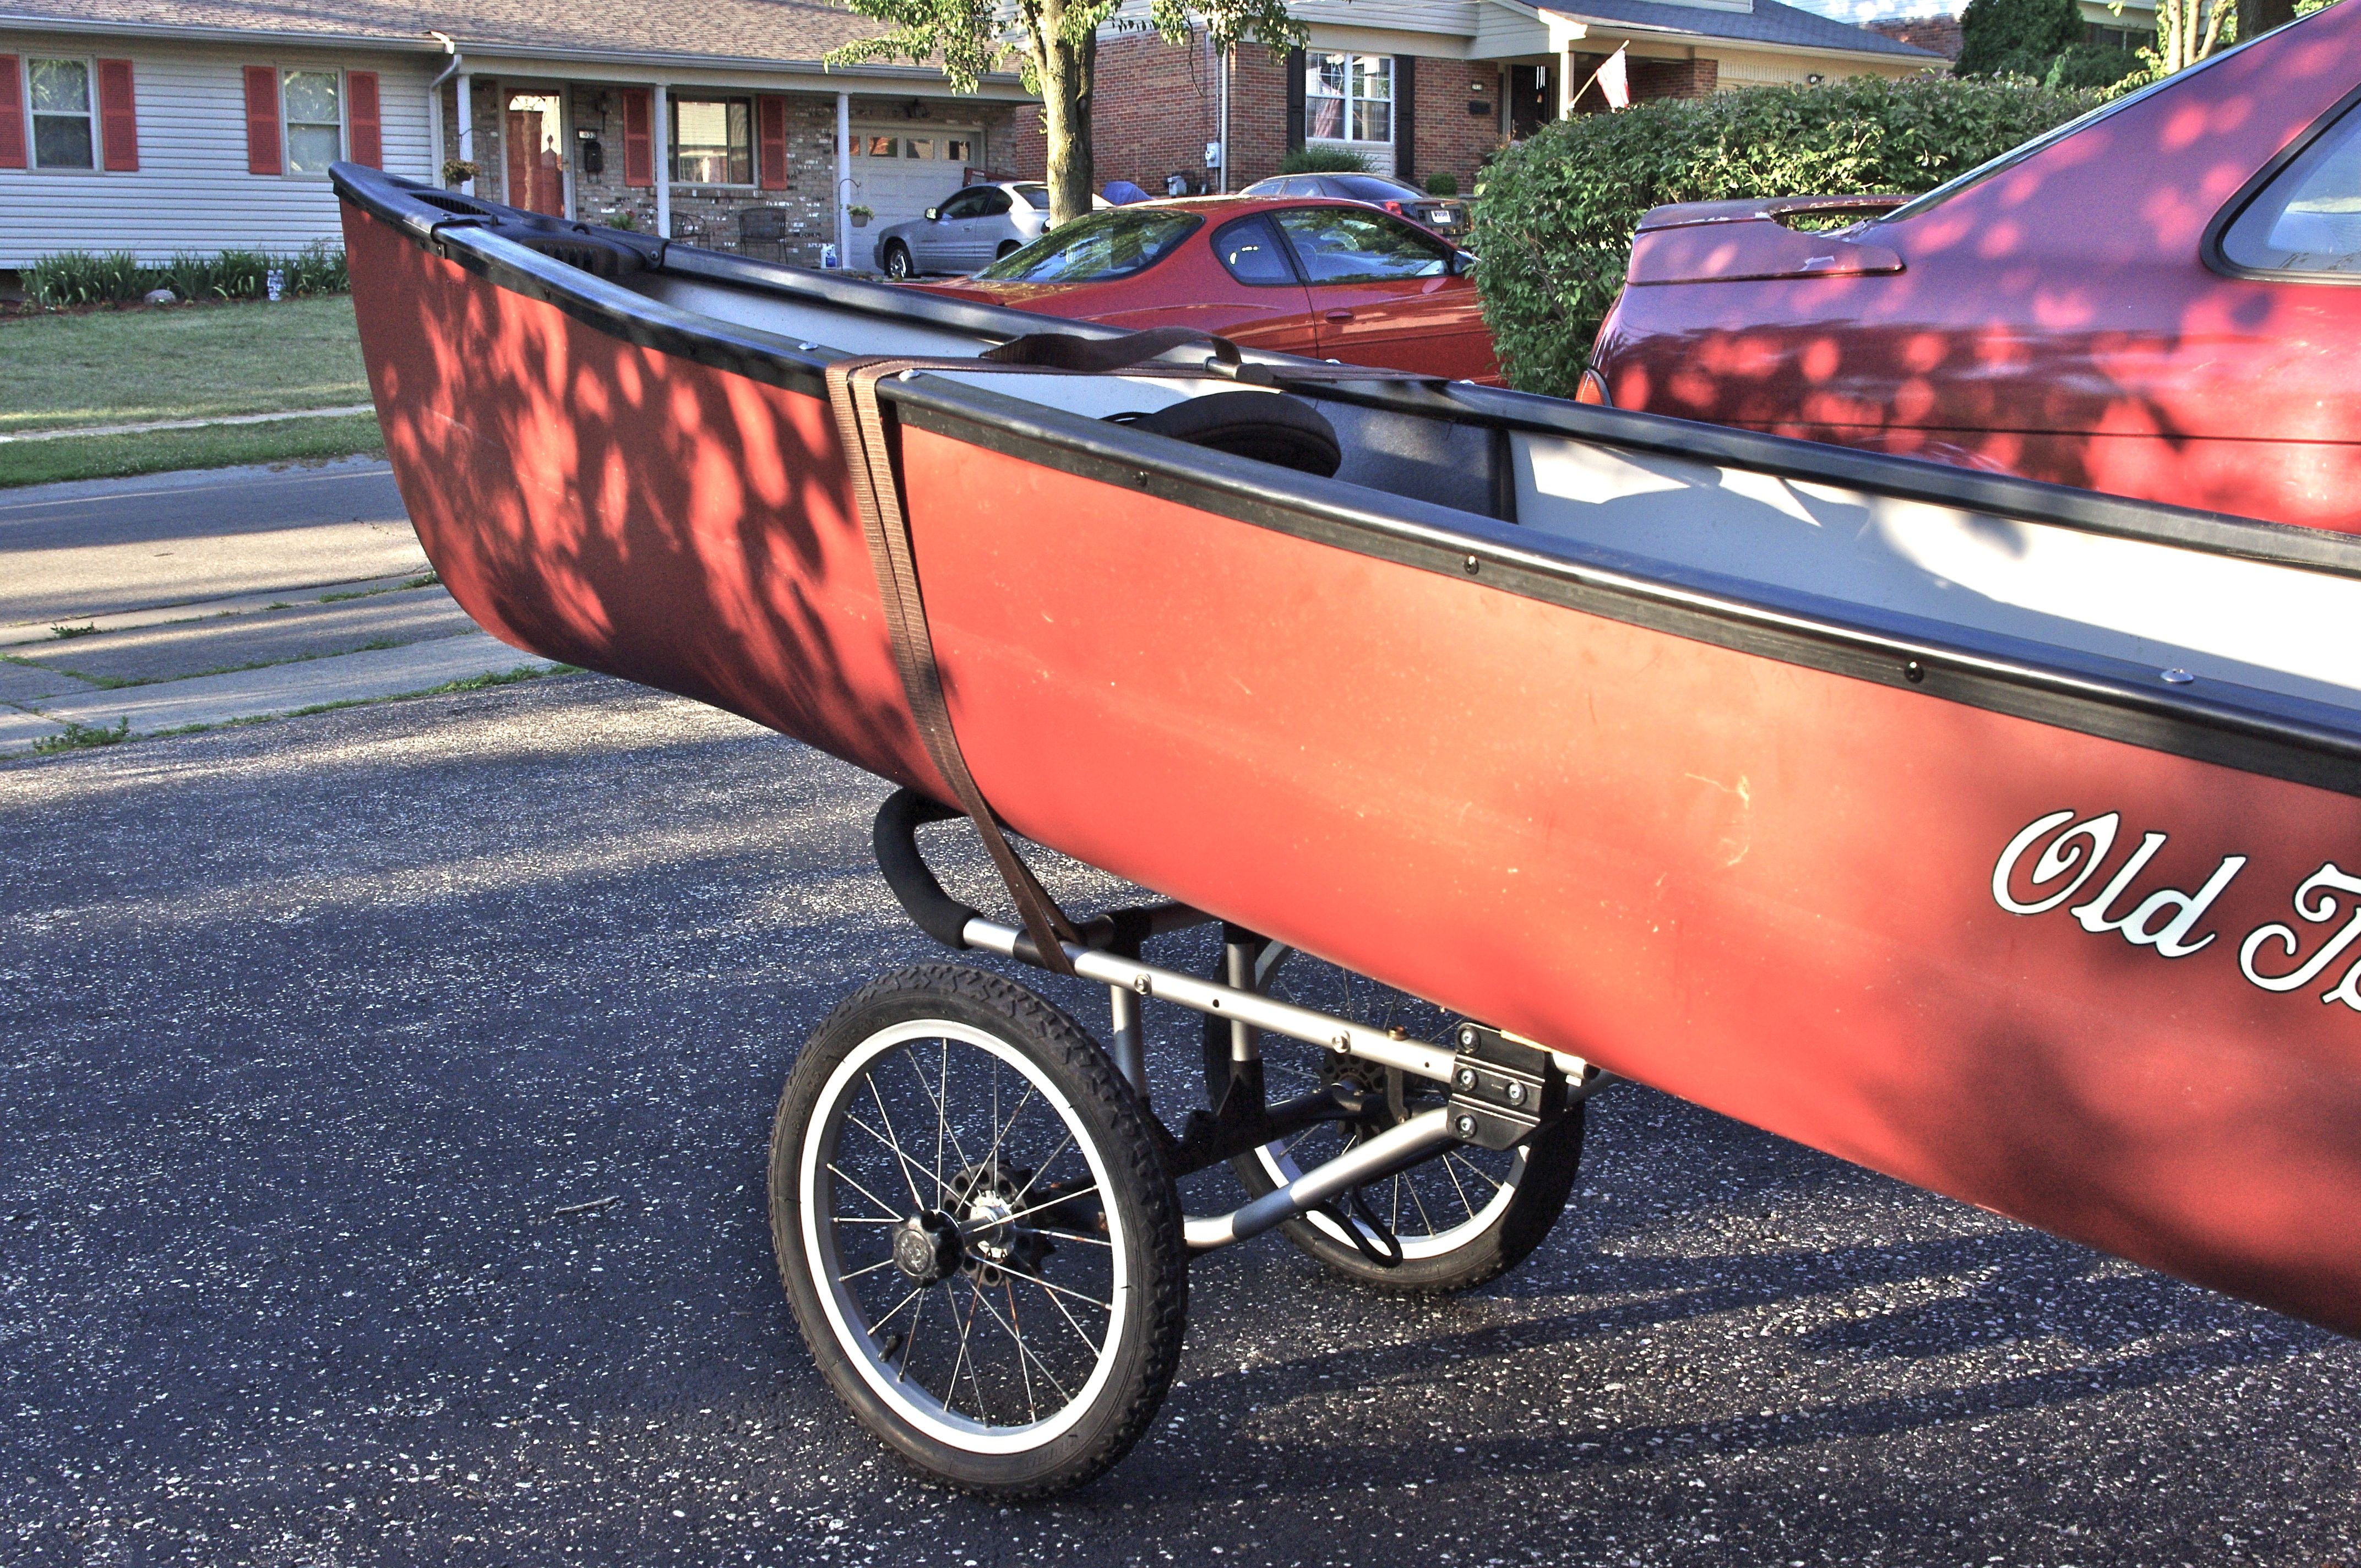 Canoe/Kayak Caddy mod from a Jogging Stroller